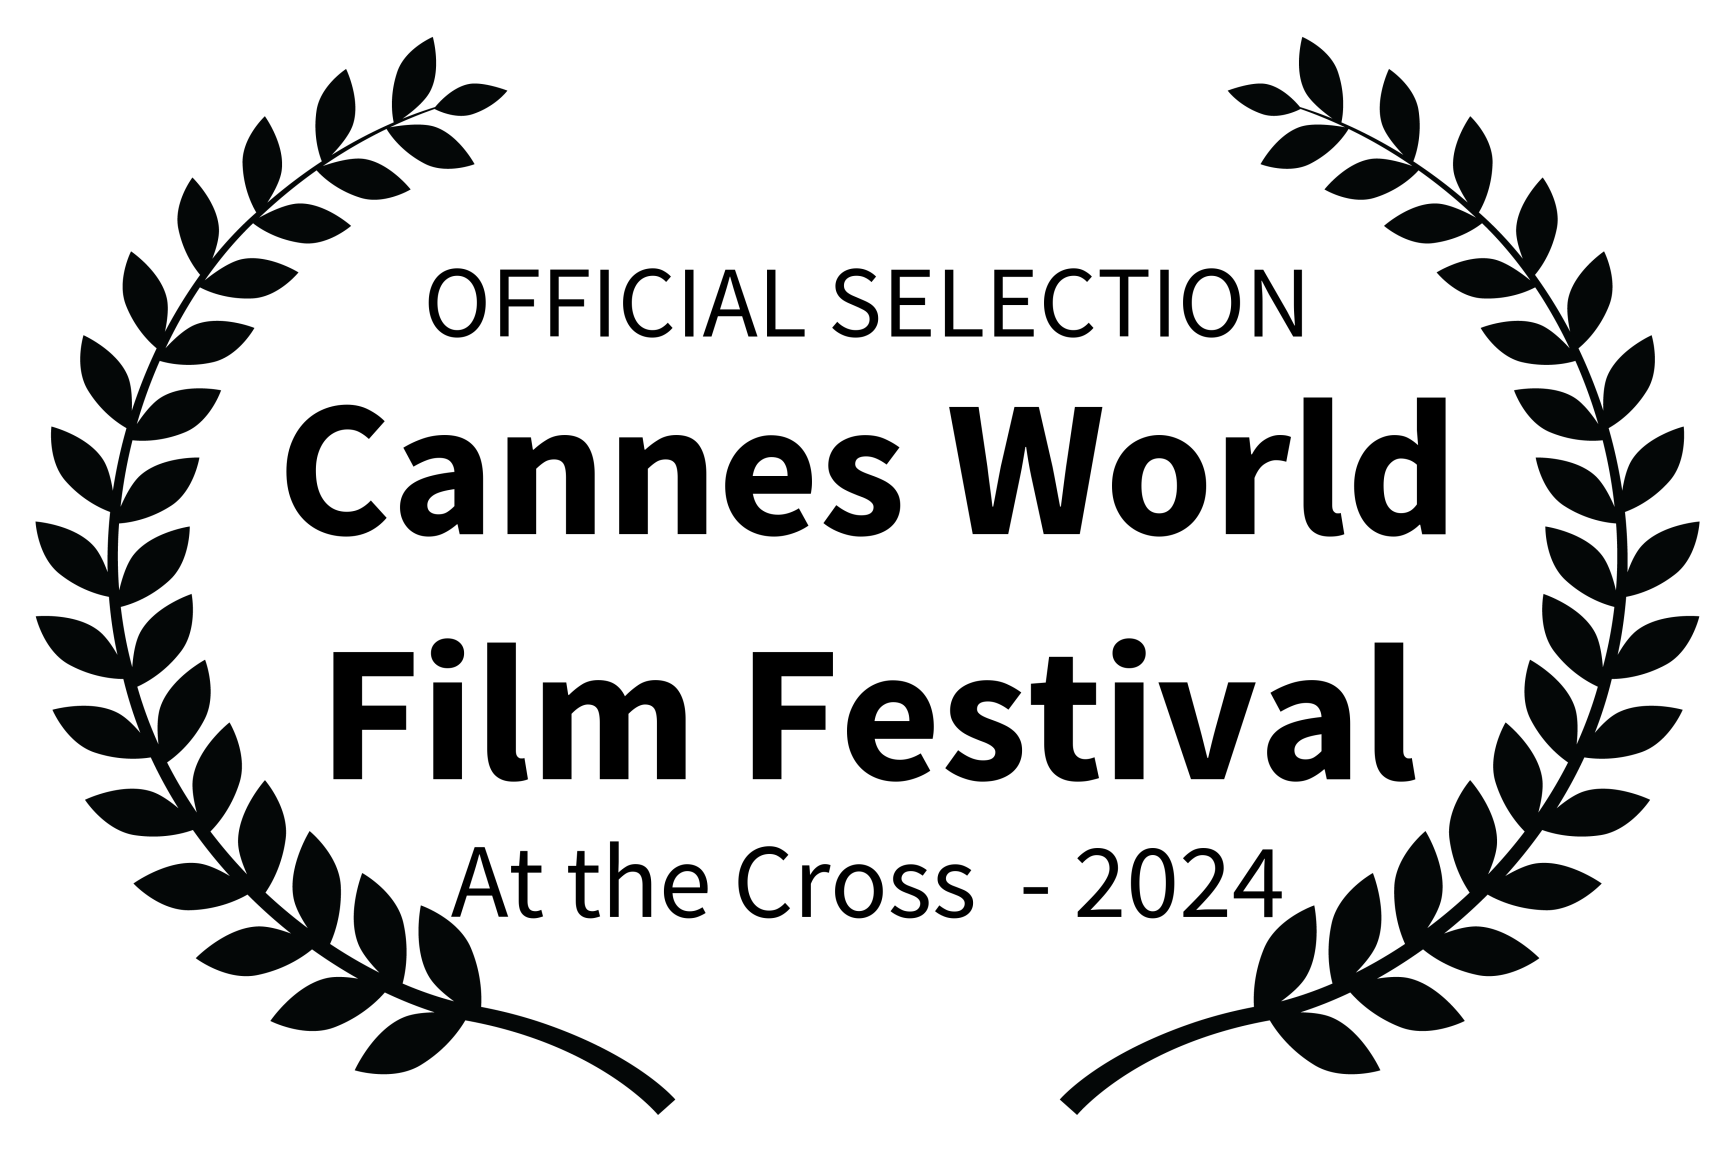 RLCGPROD At the Cross Award Cannes World Film Festival